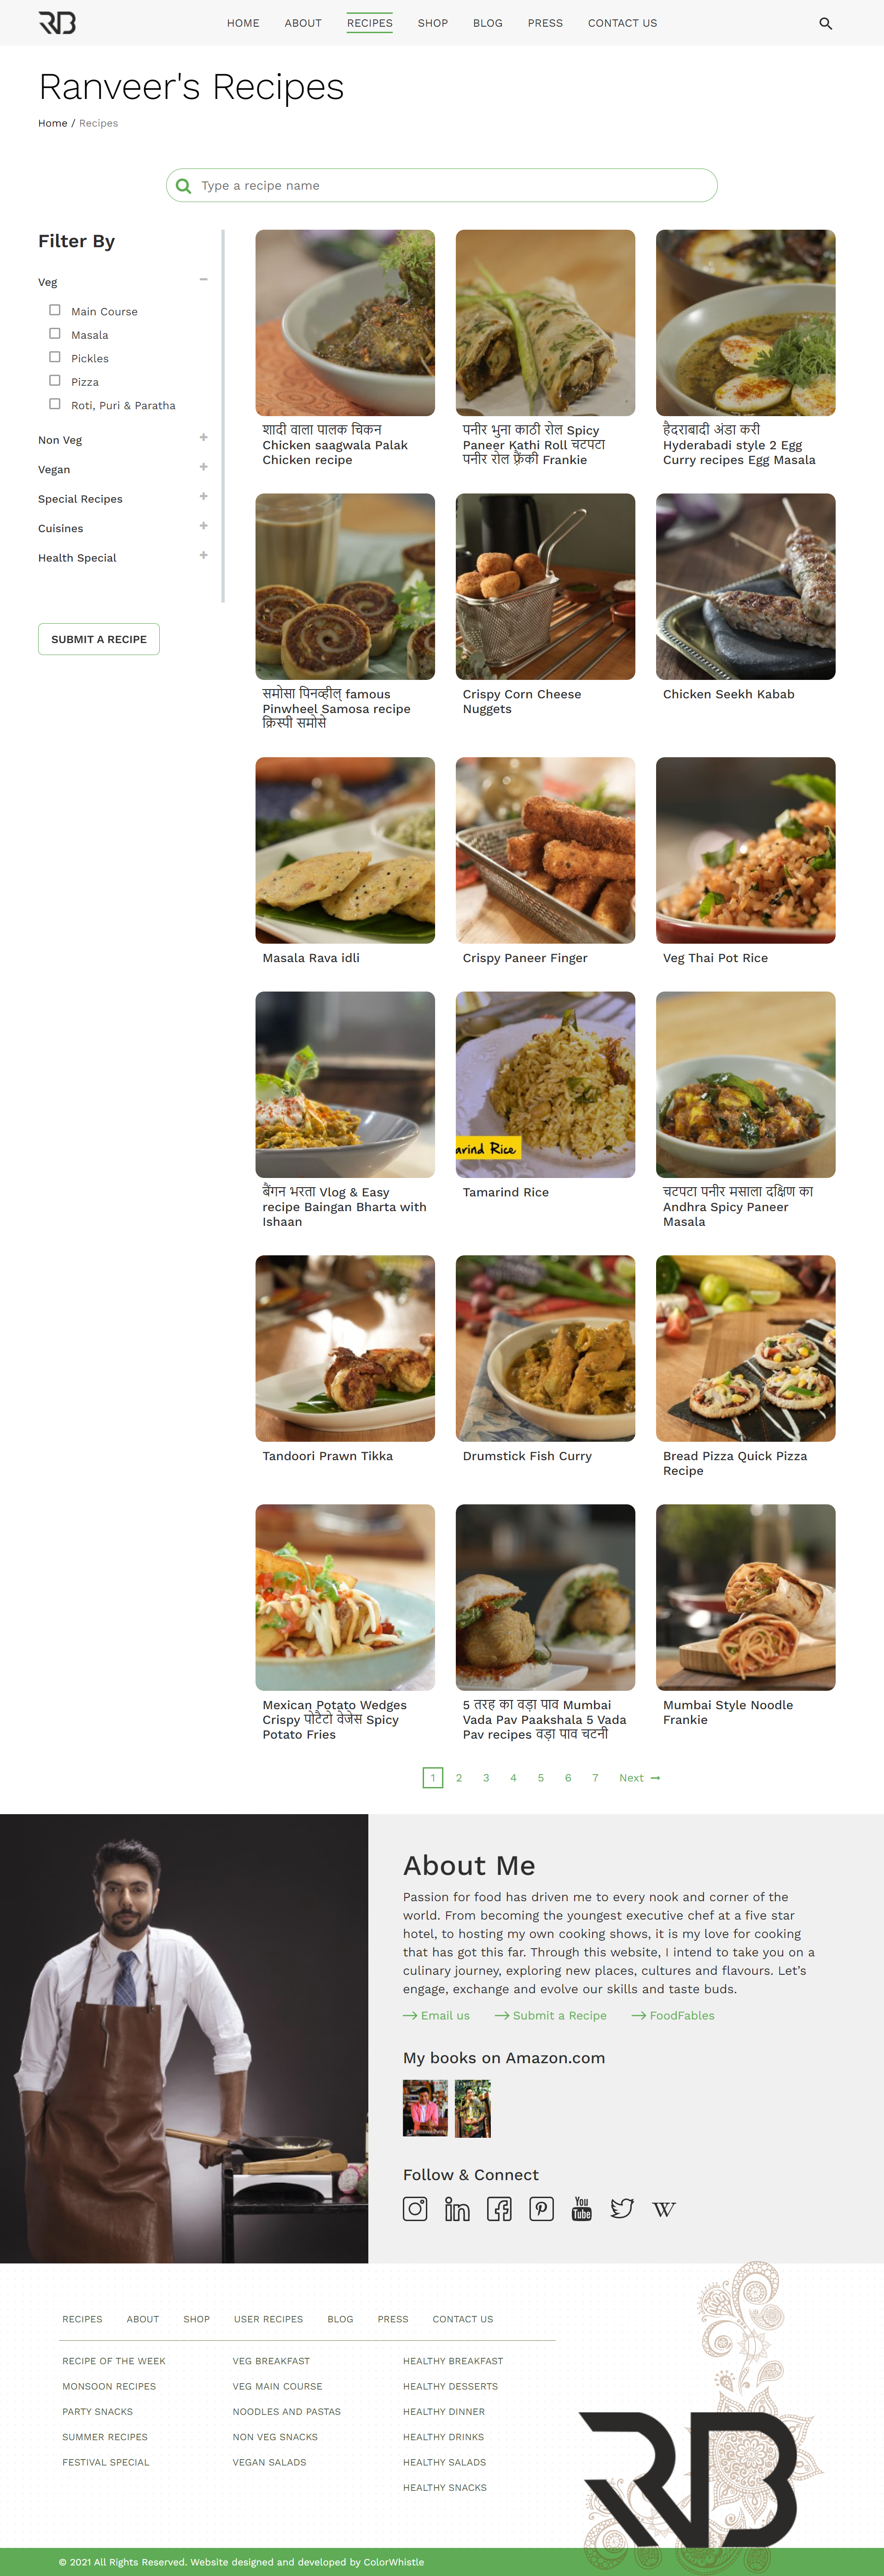 recipes page design - Celebrity Chef Website Design & Development Using WordPress